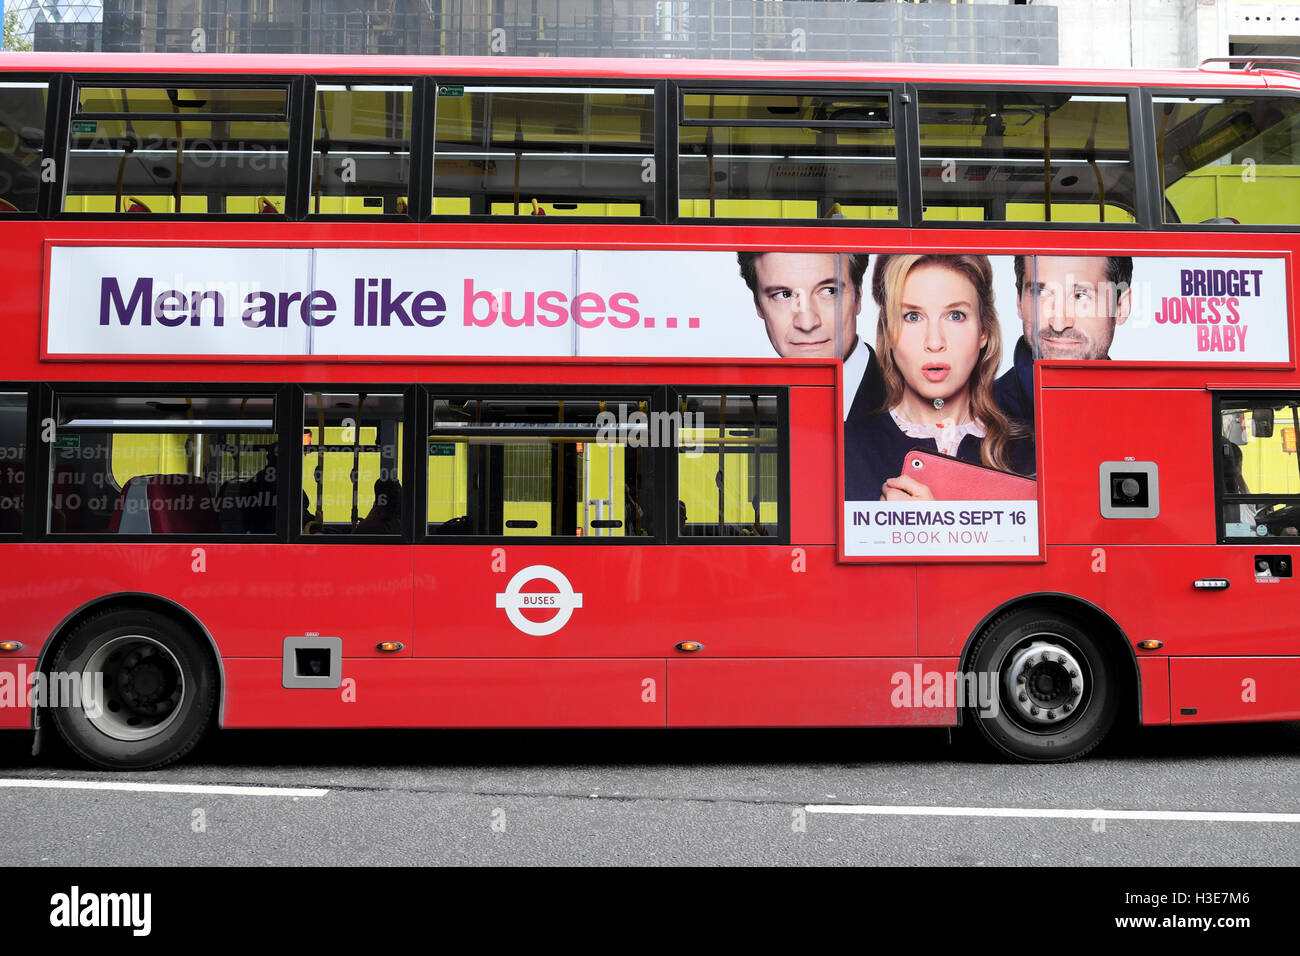 'Men are like buses'  Bridget Jones Baby film advert on the side of a red double-decker London bus UK  KATHY DEWITT Stock Photo